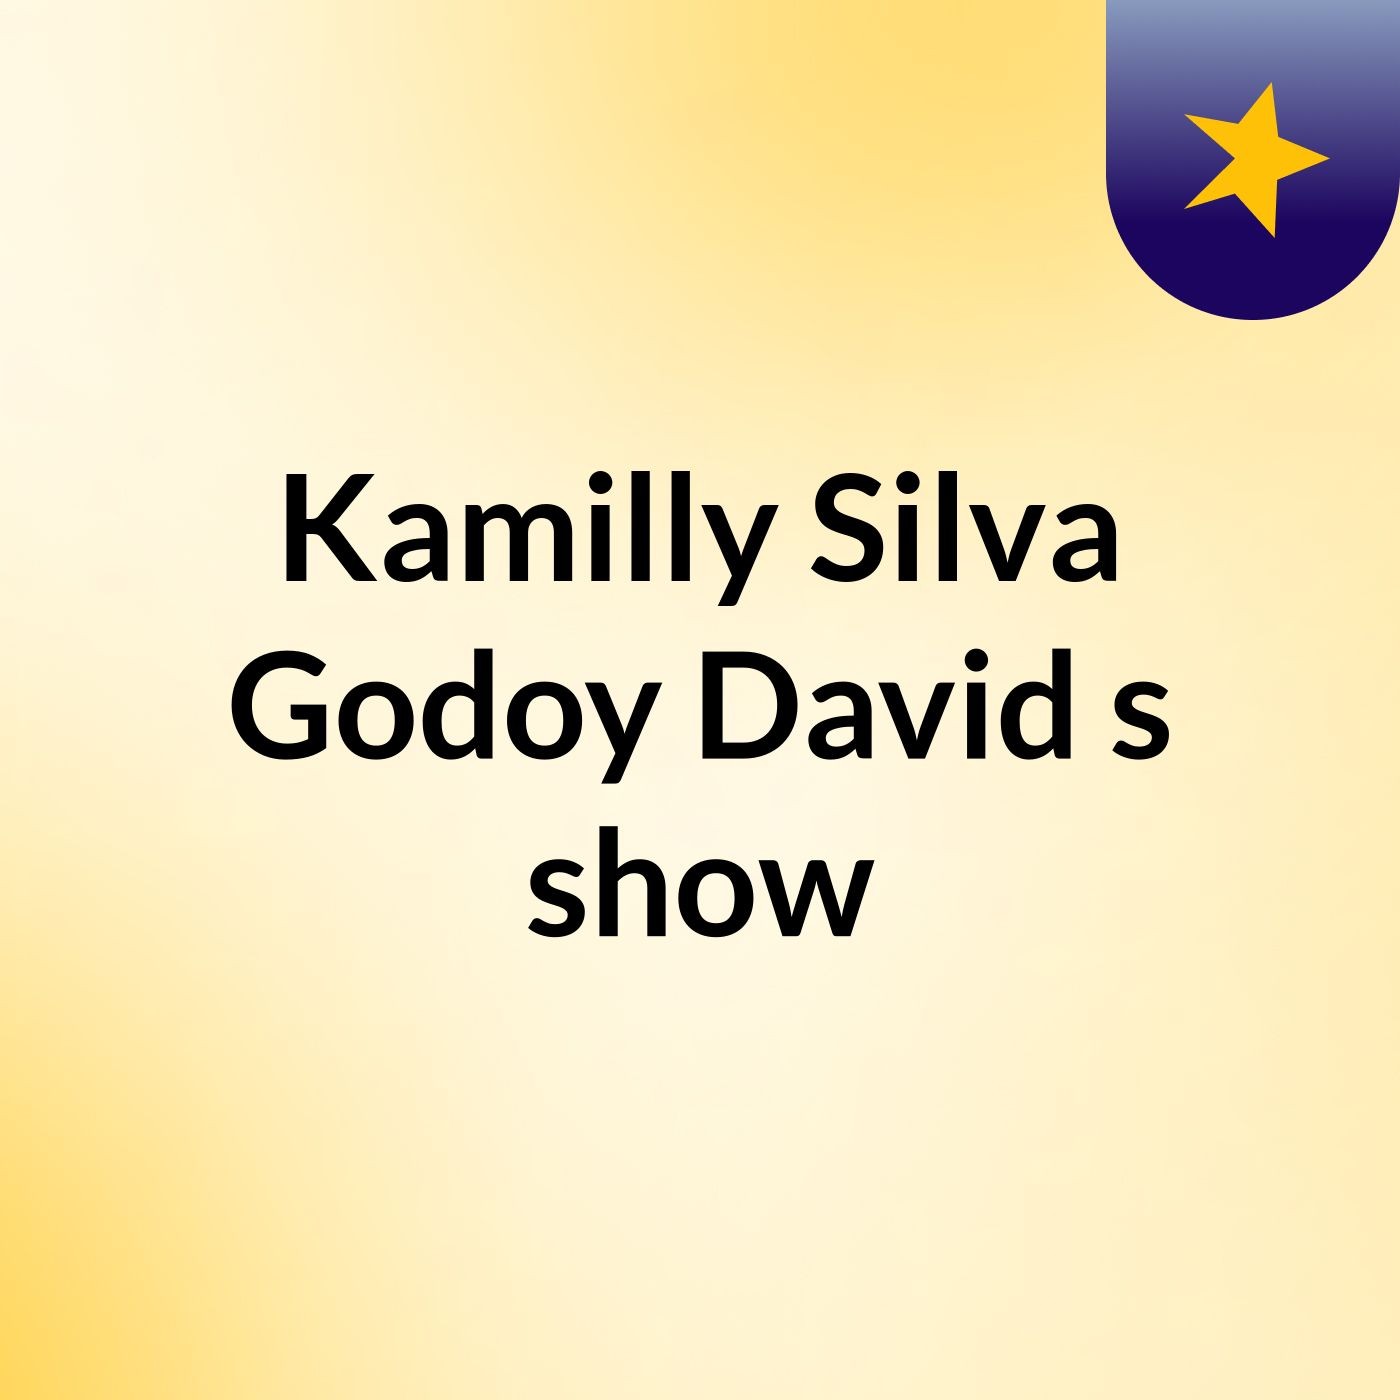 Episódio 8 - Kamilly Silva Godoy David's show